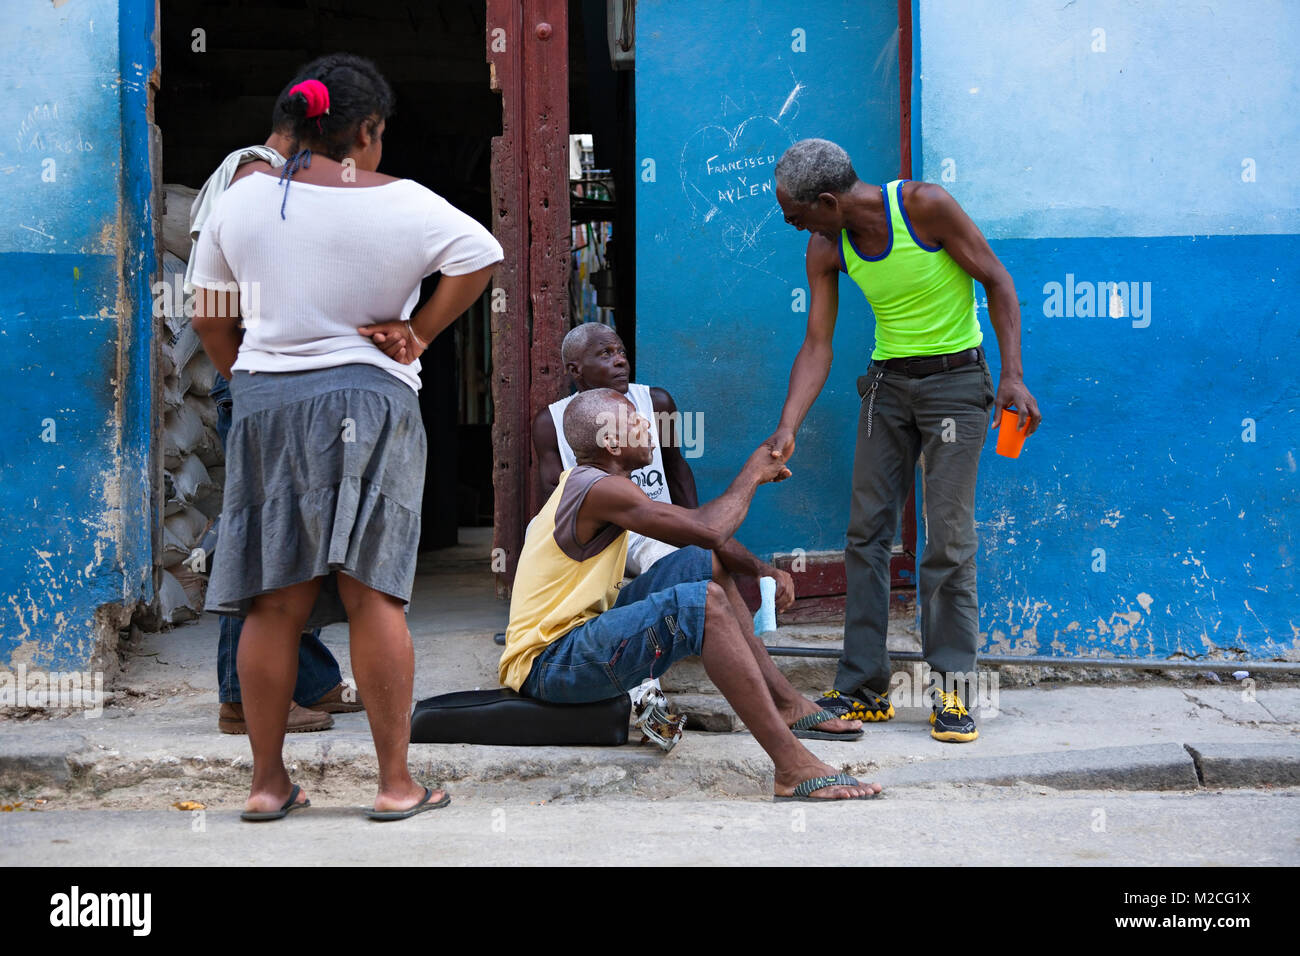 Cuban men greeting each other in Havana, Cuba. Stock Photo